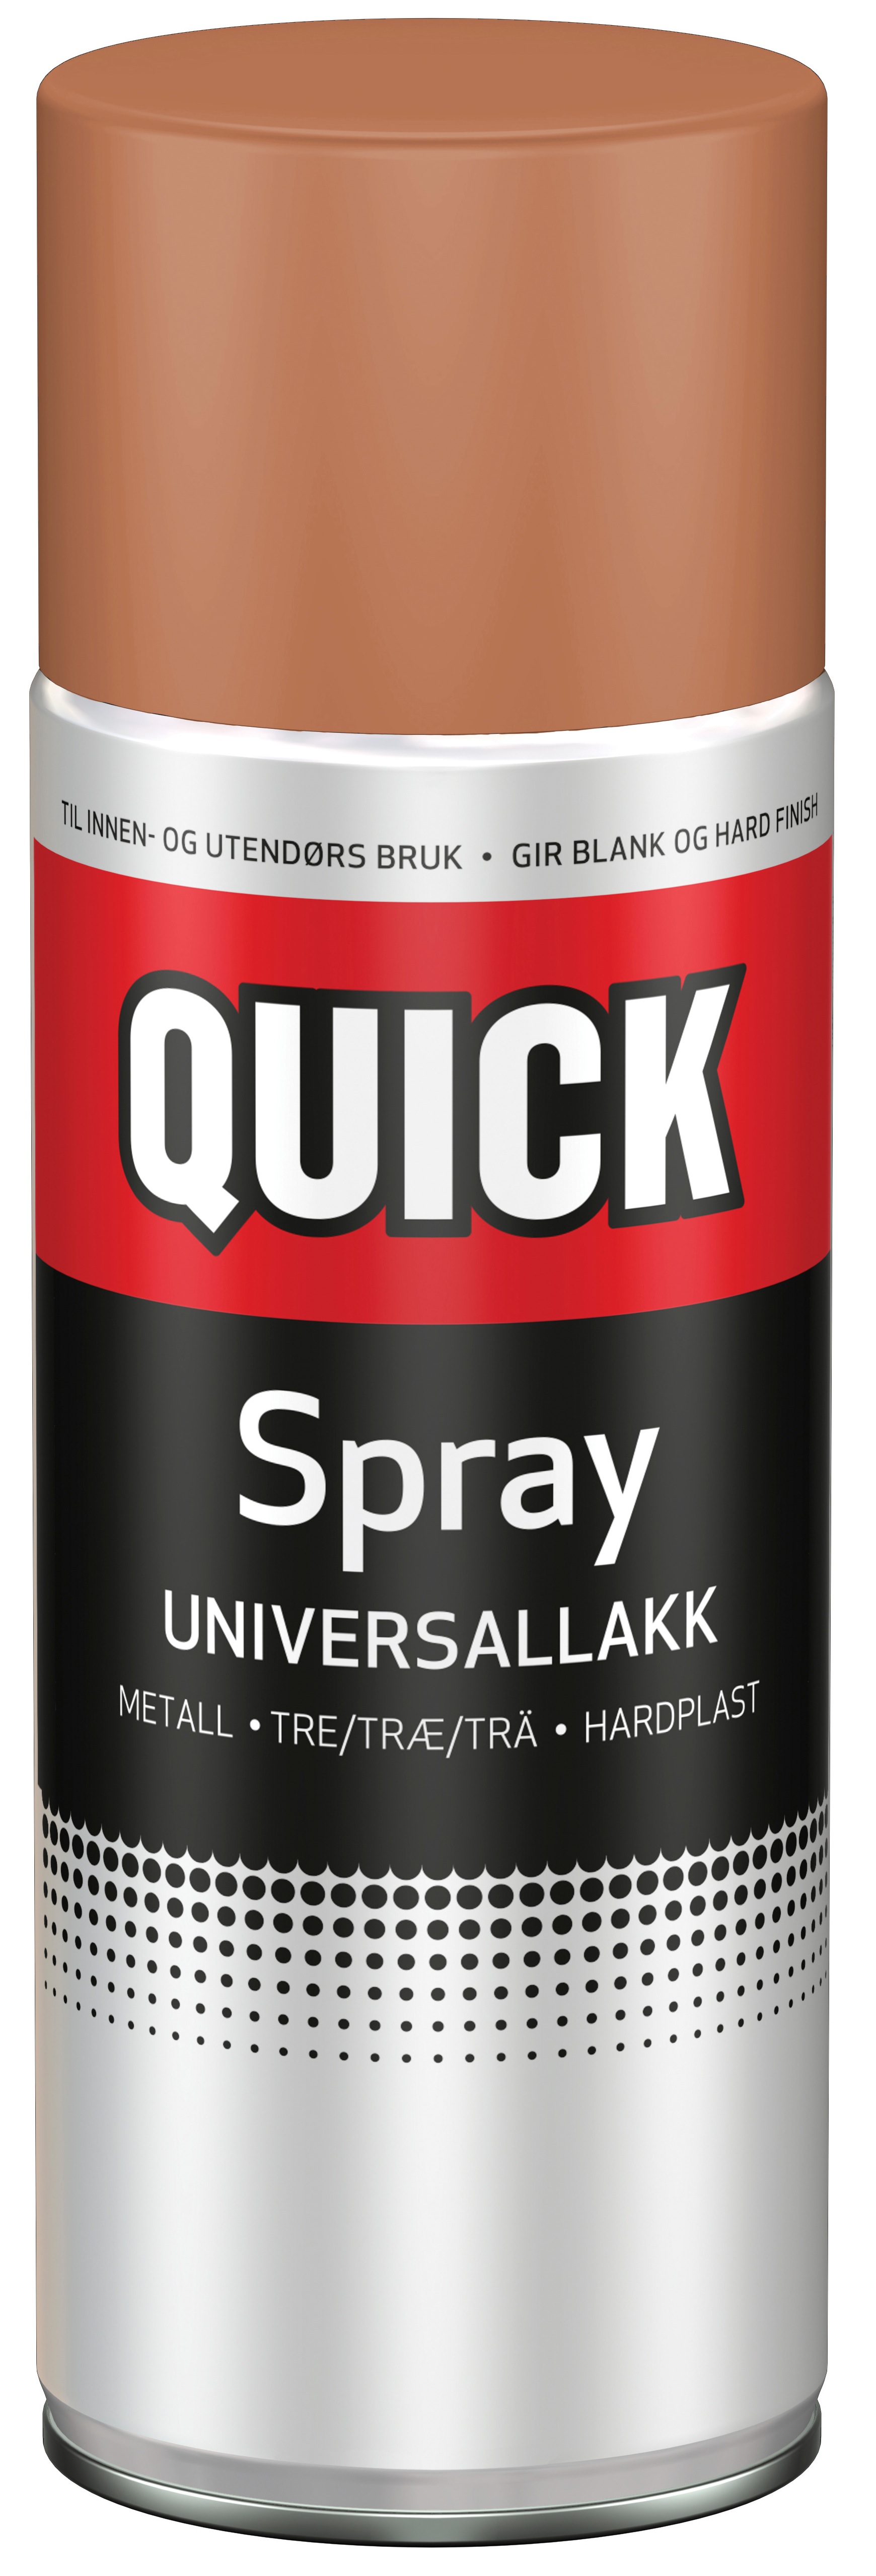 Quick Spray Universallakk